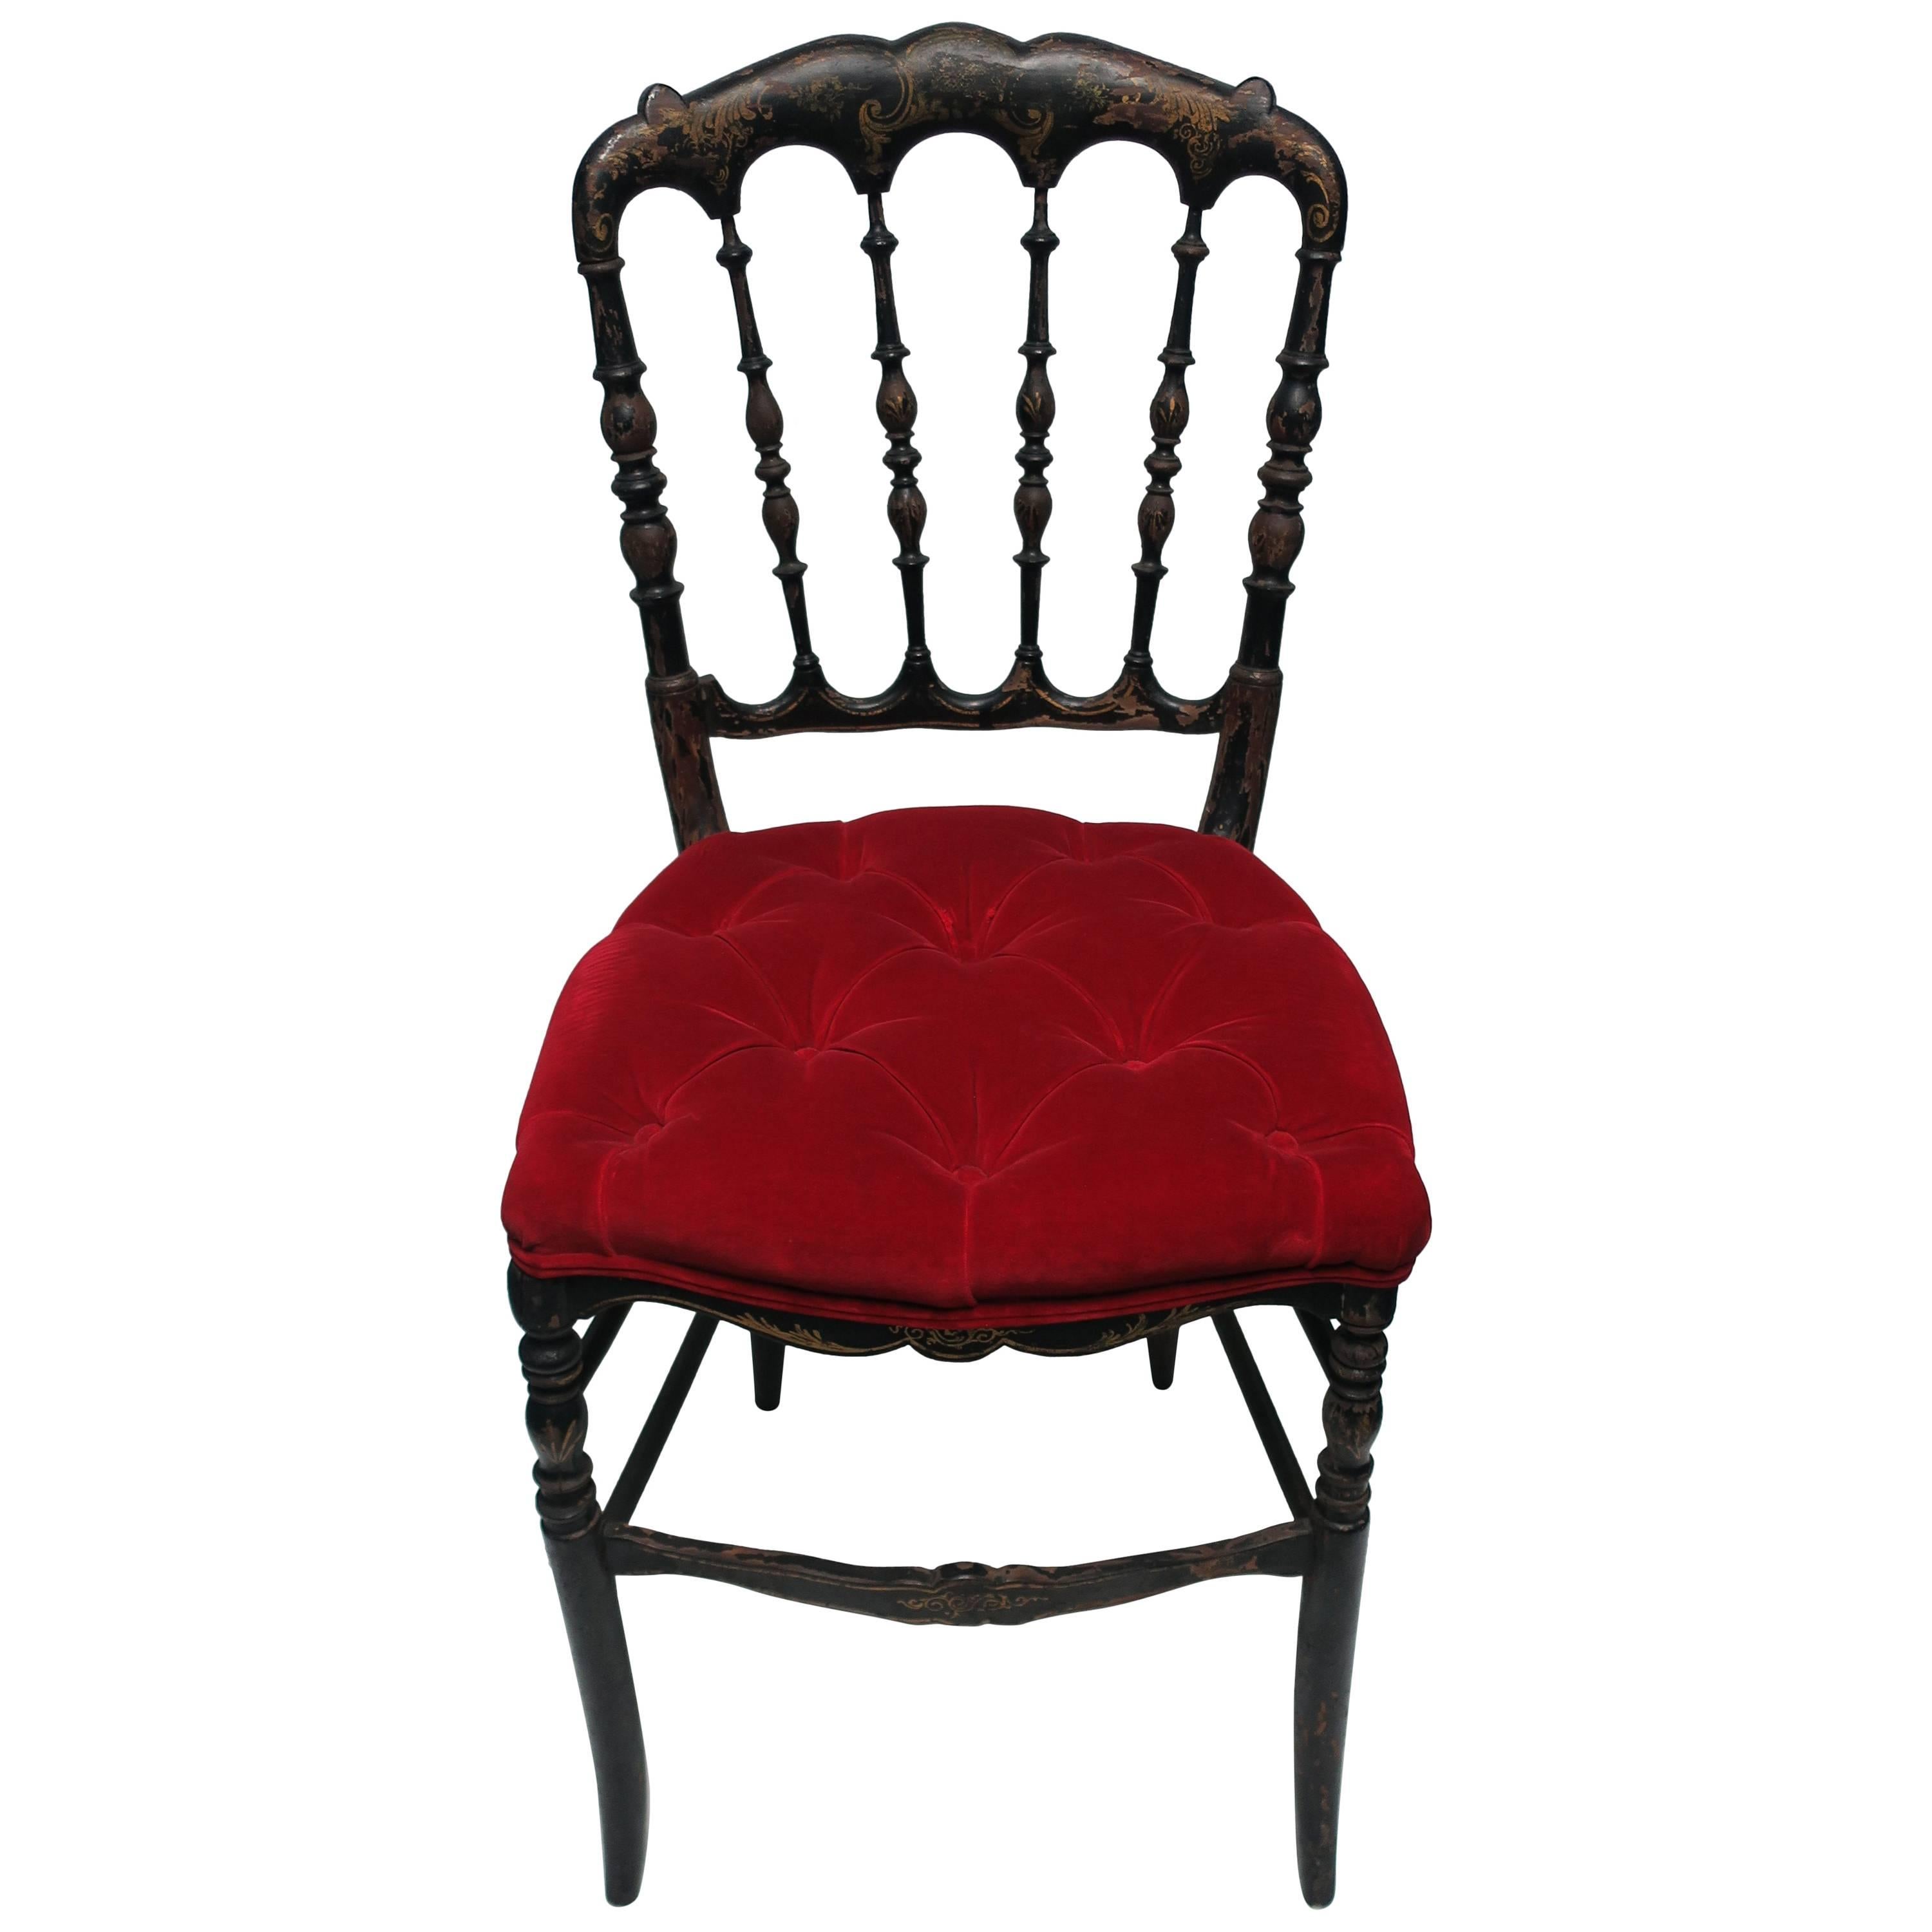 Antique Black Wood and Red Velvet English Chiavari Chair